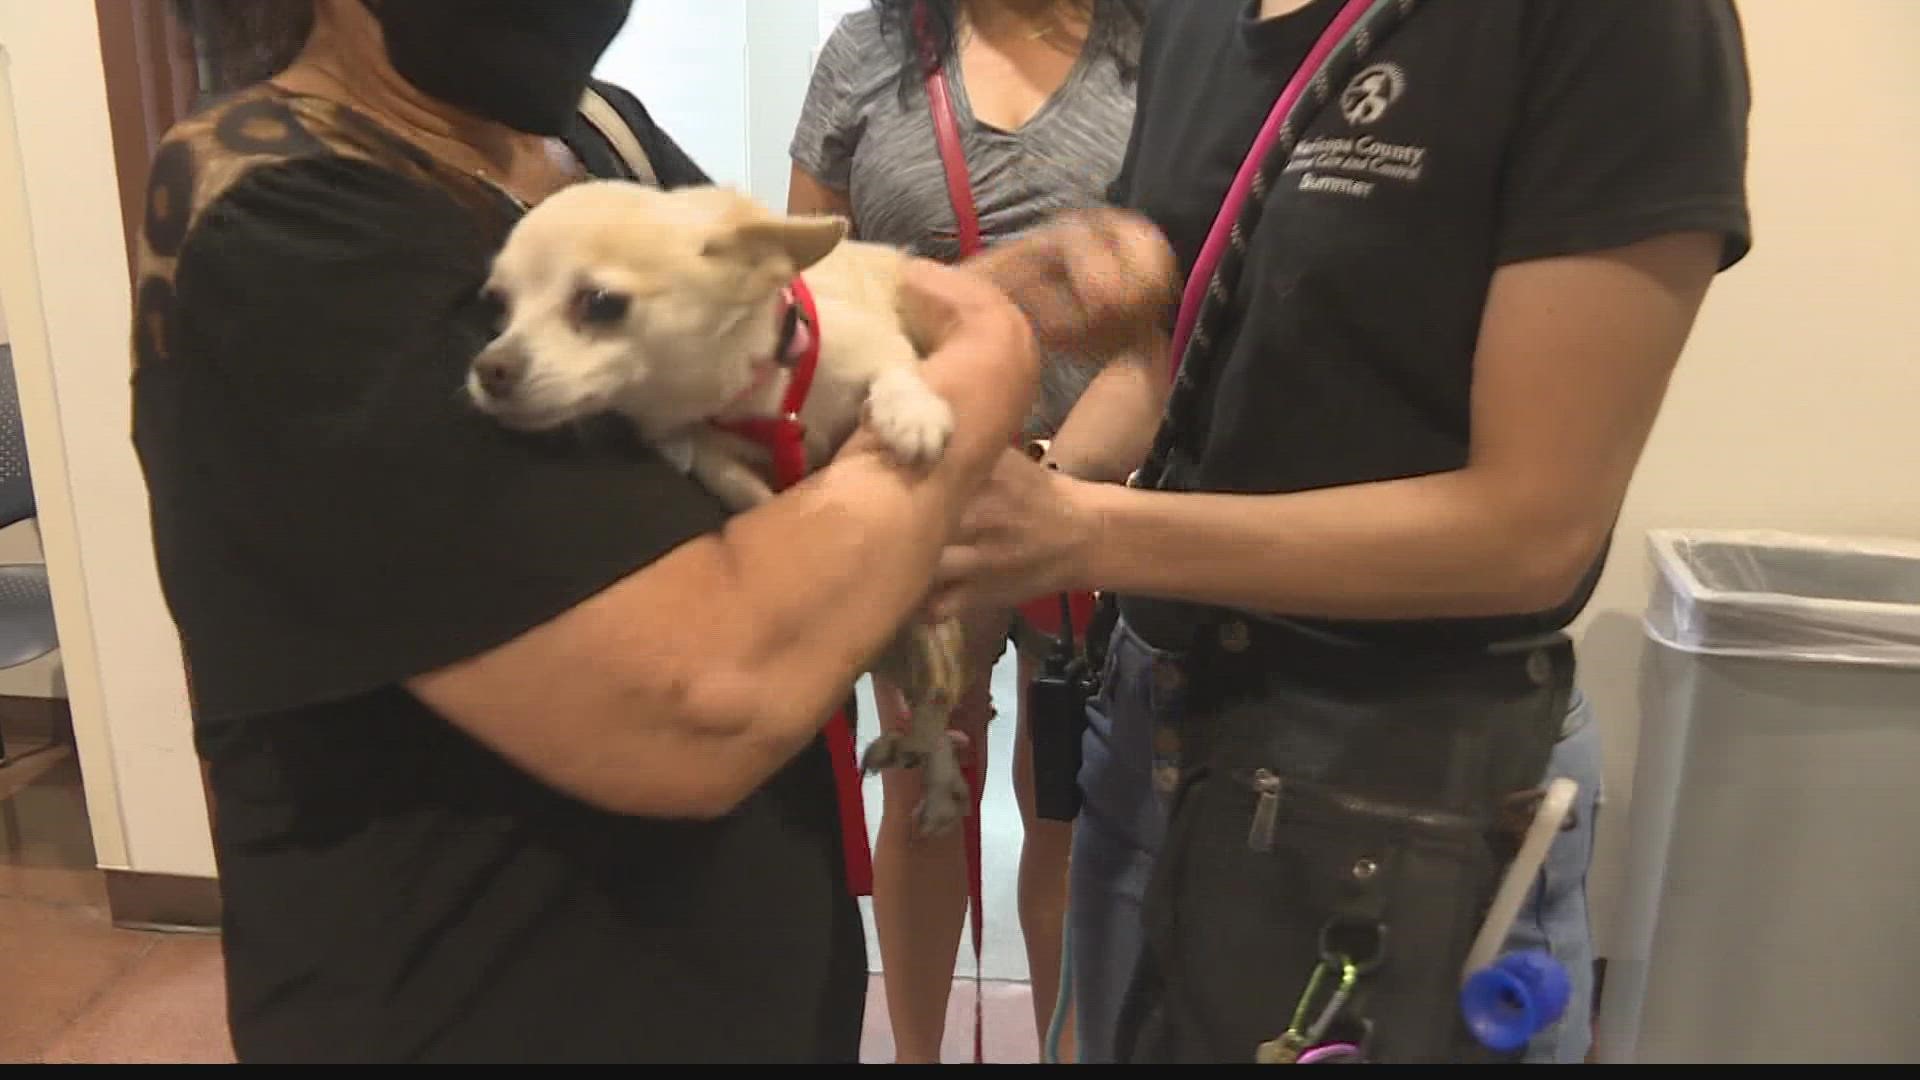 Valley pet owner reunites with lost dog after fireworks 